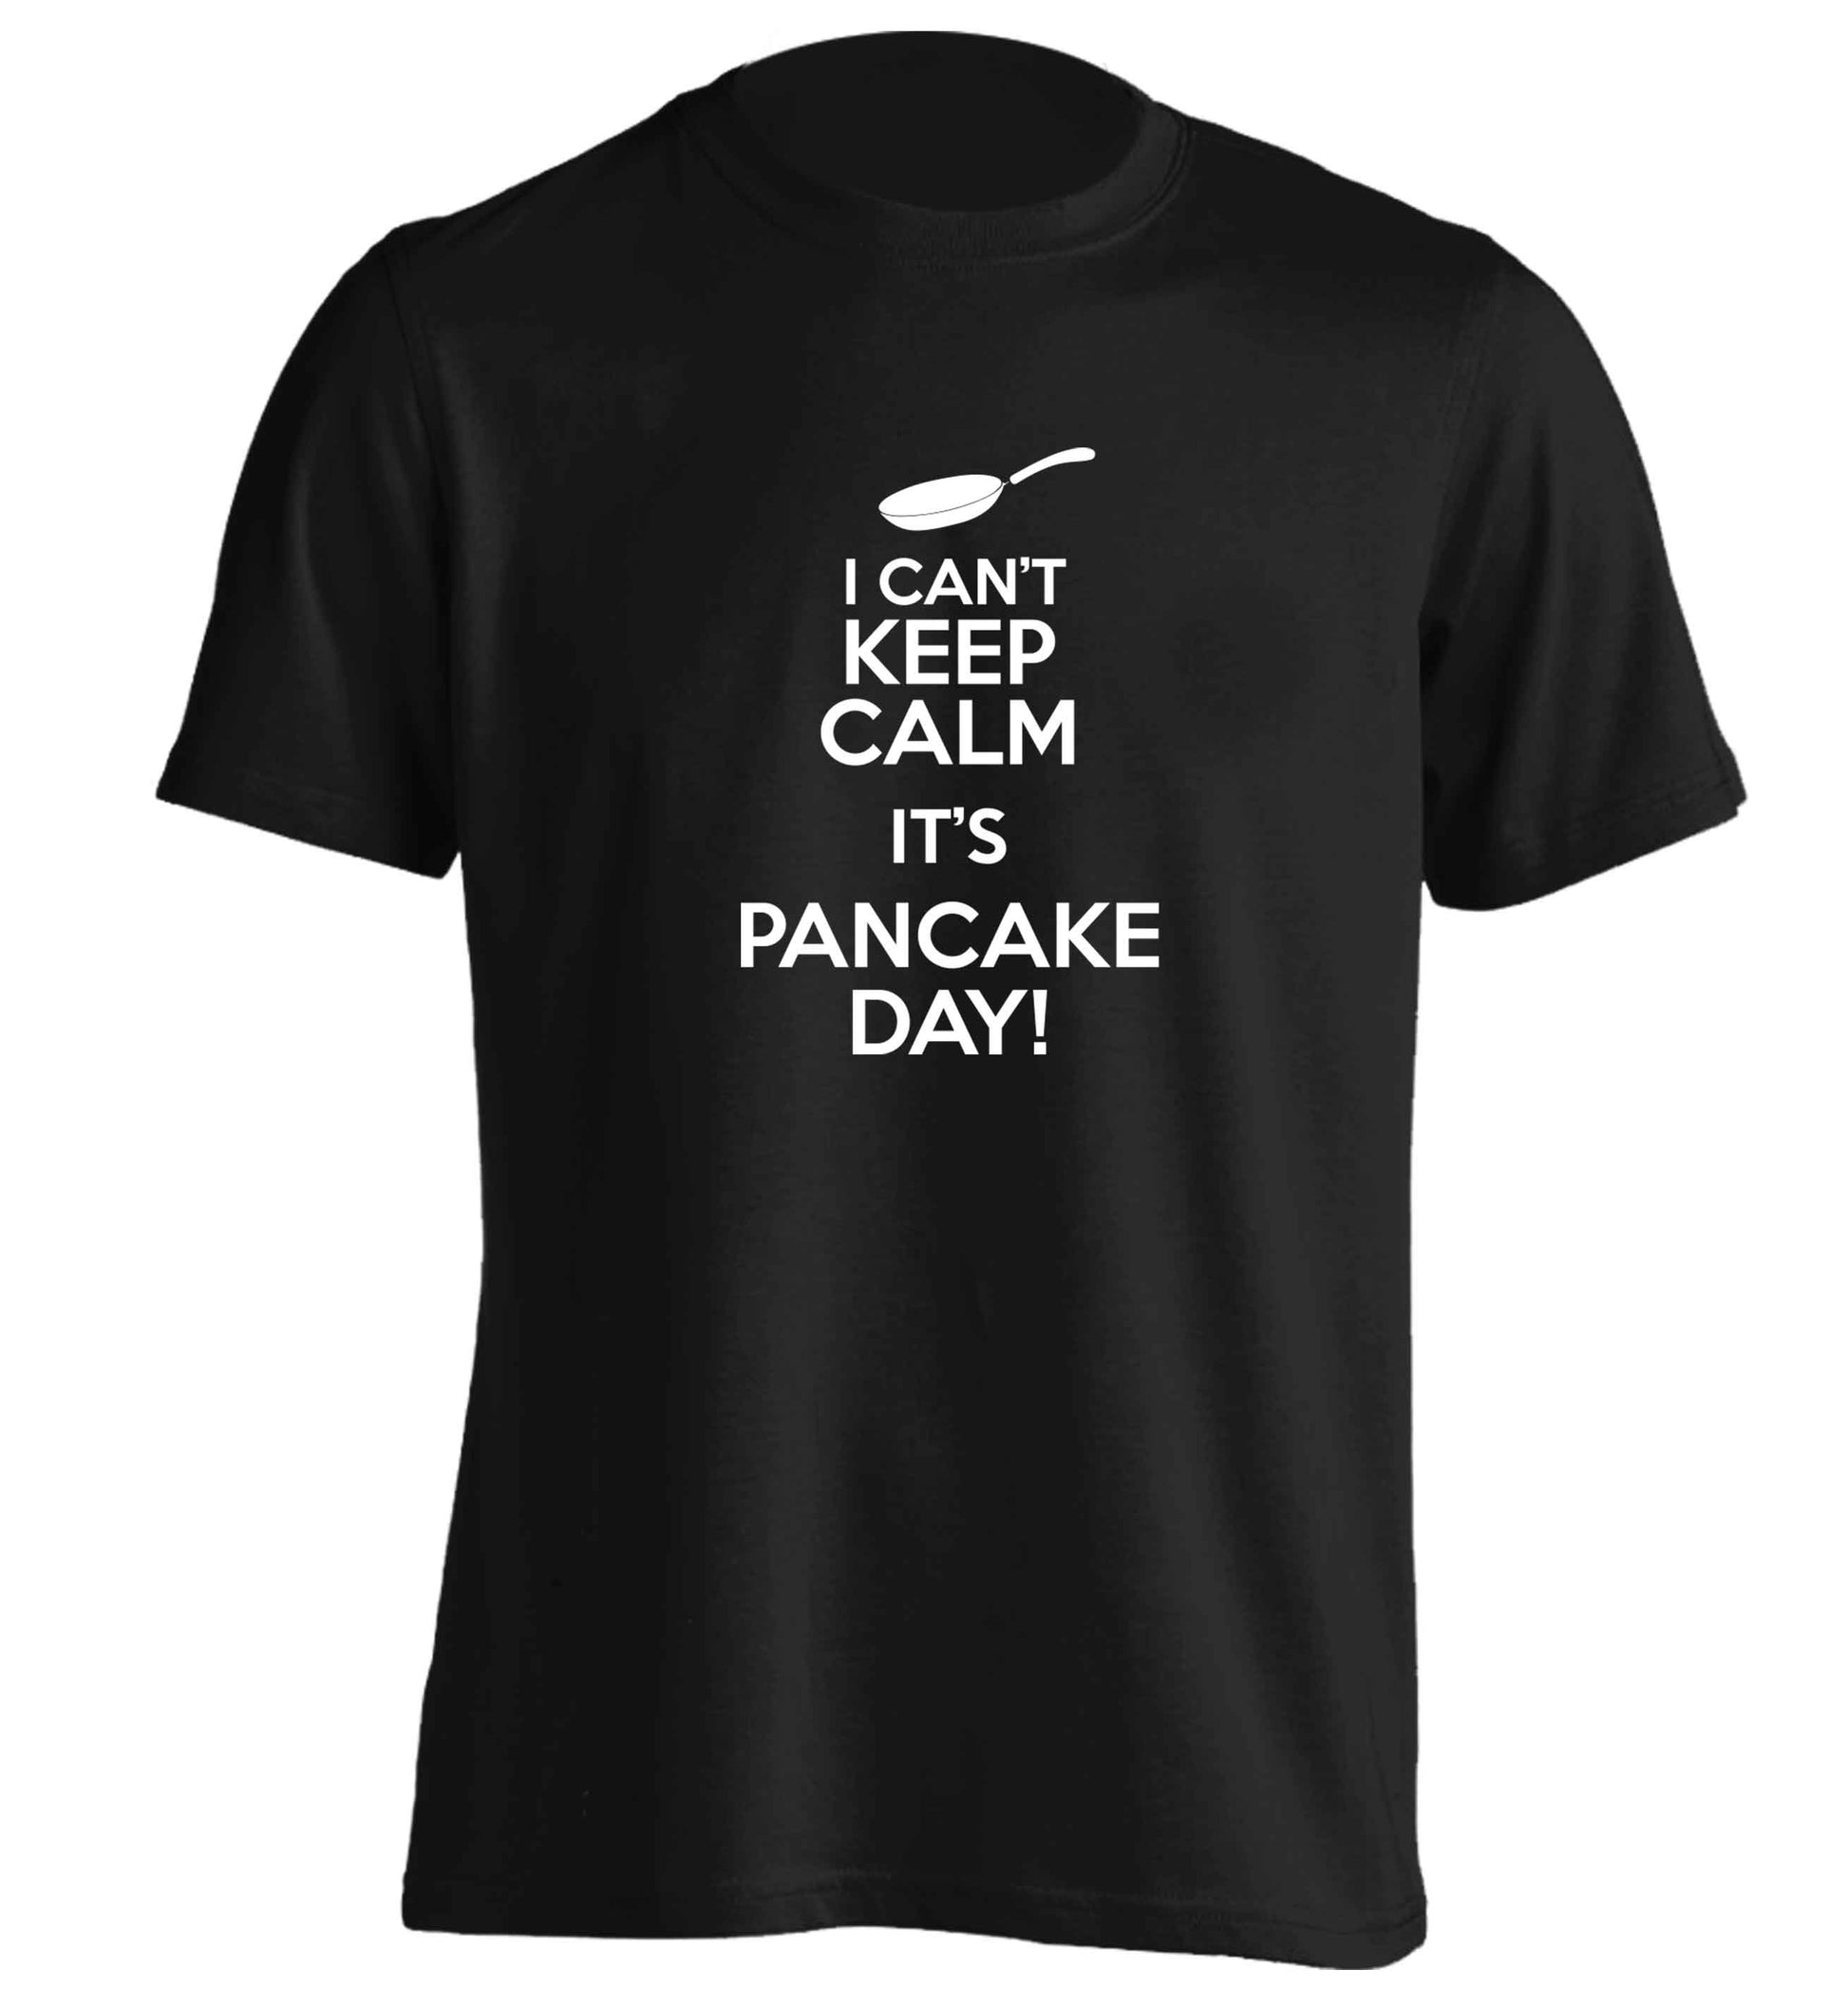 I can't keep calm it's pancake day! adults unisex black Tshirt 2XL